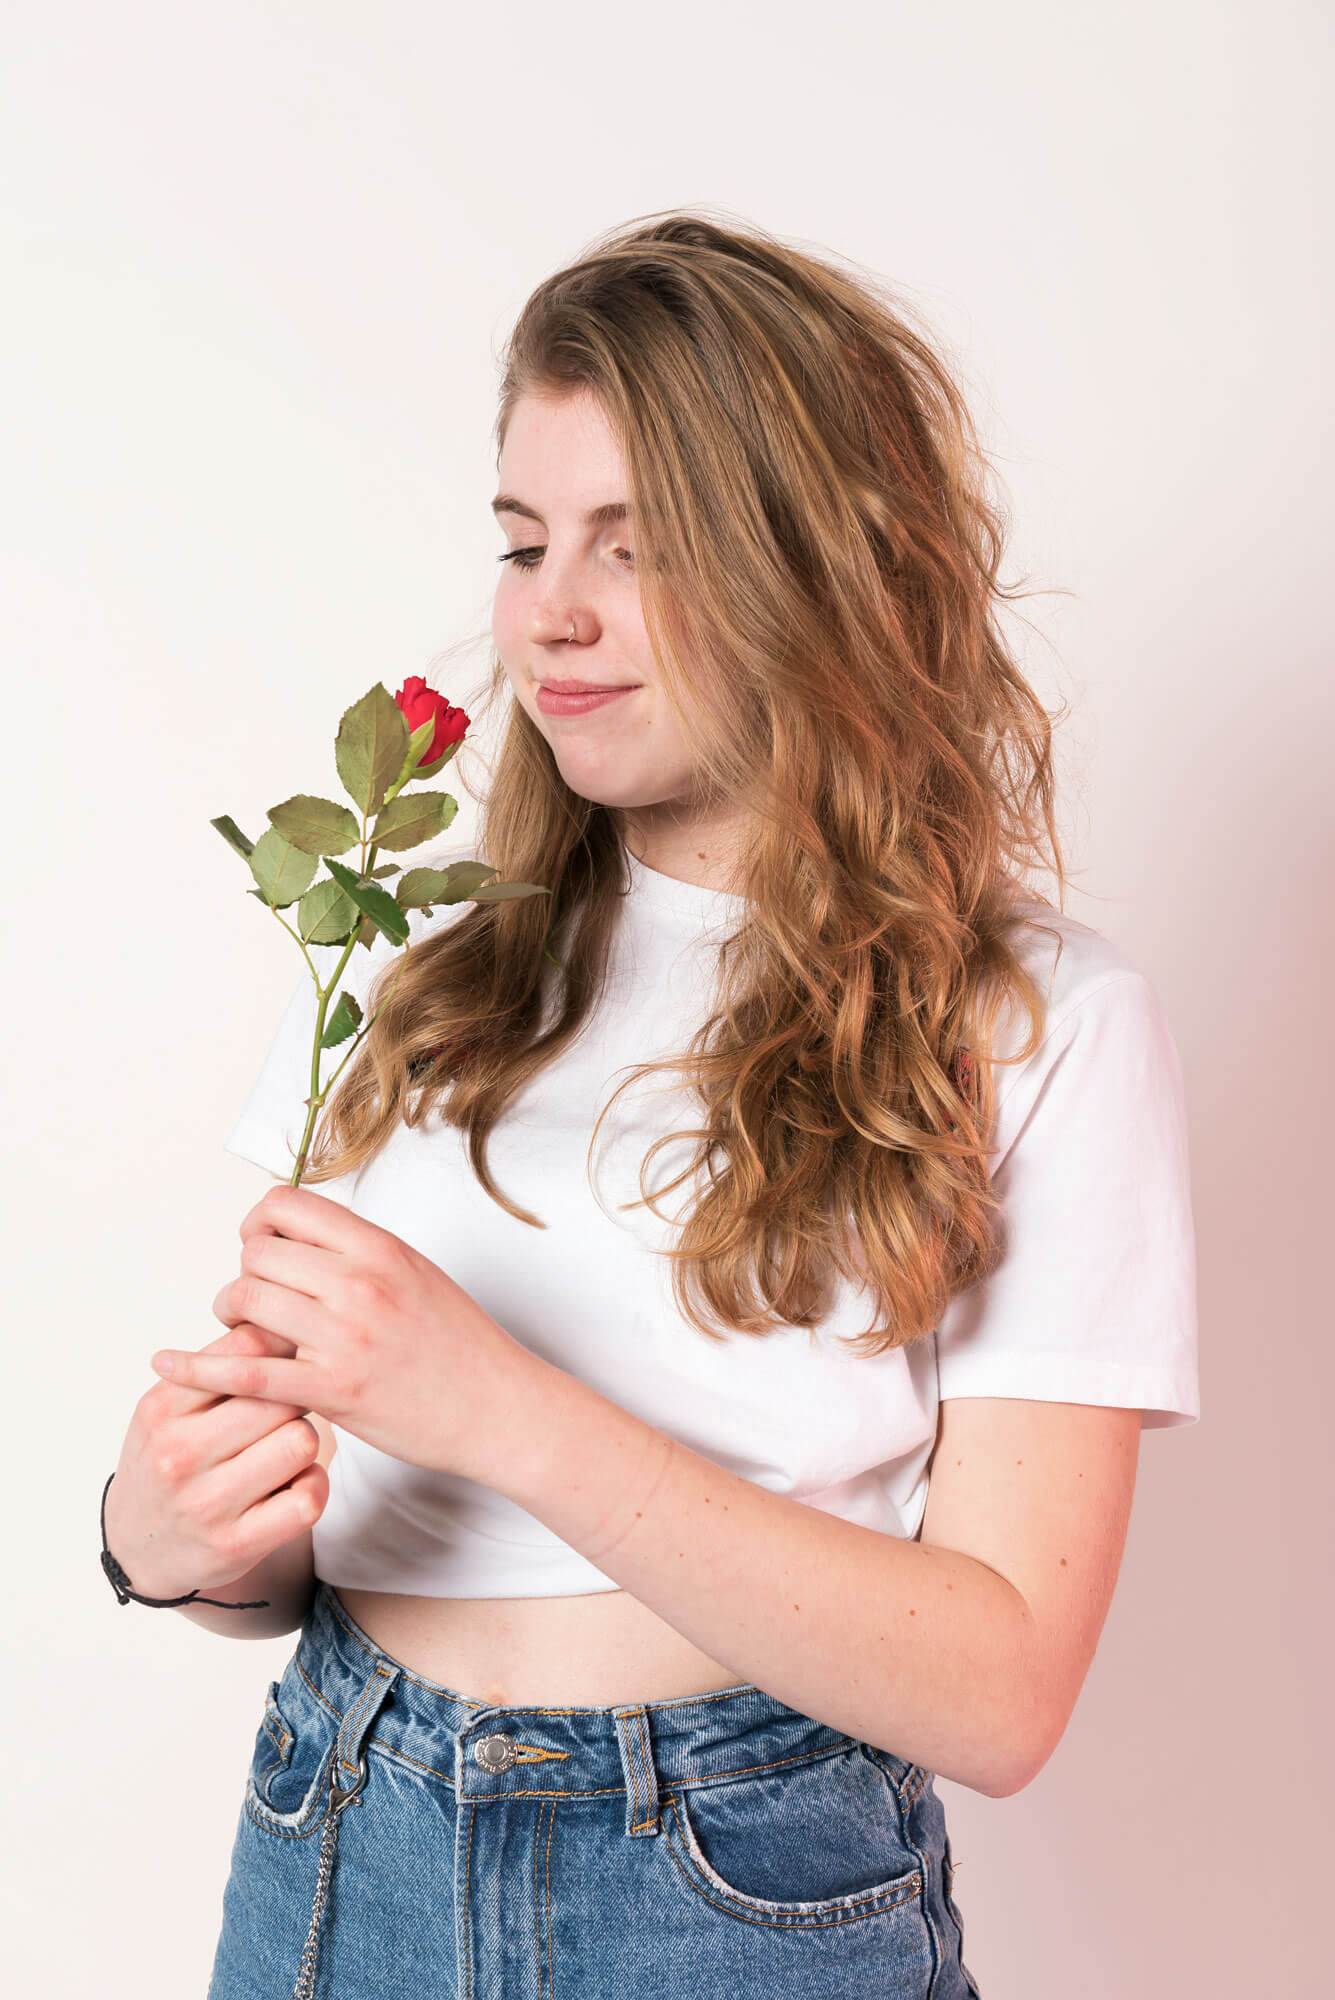 Rosan ruikend aan haar lievelingsbloem de roos